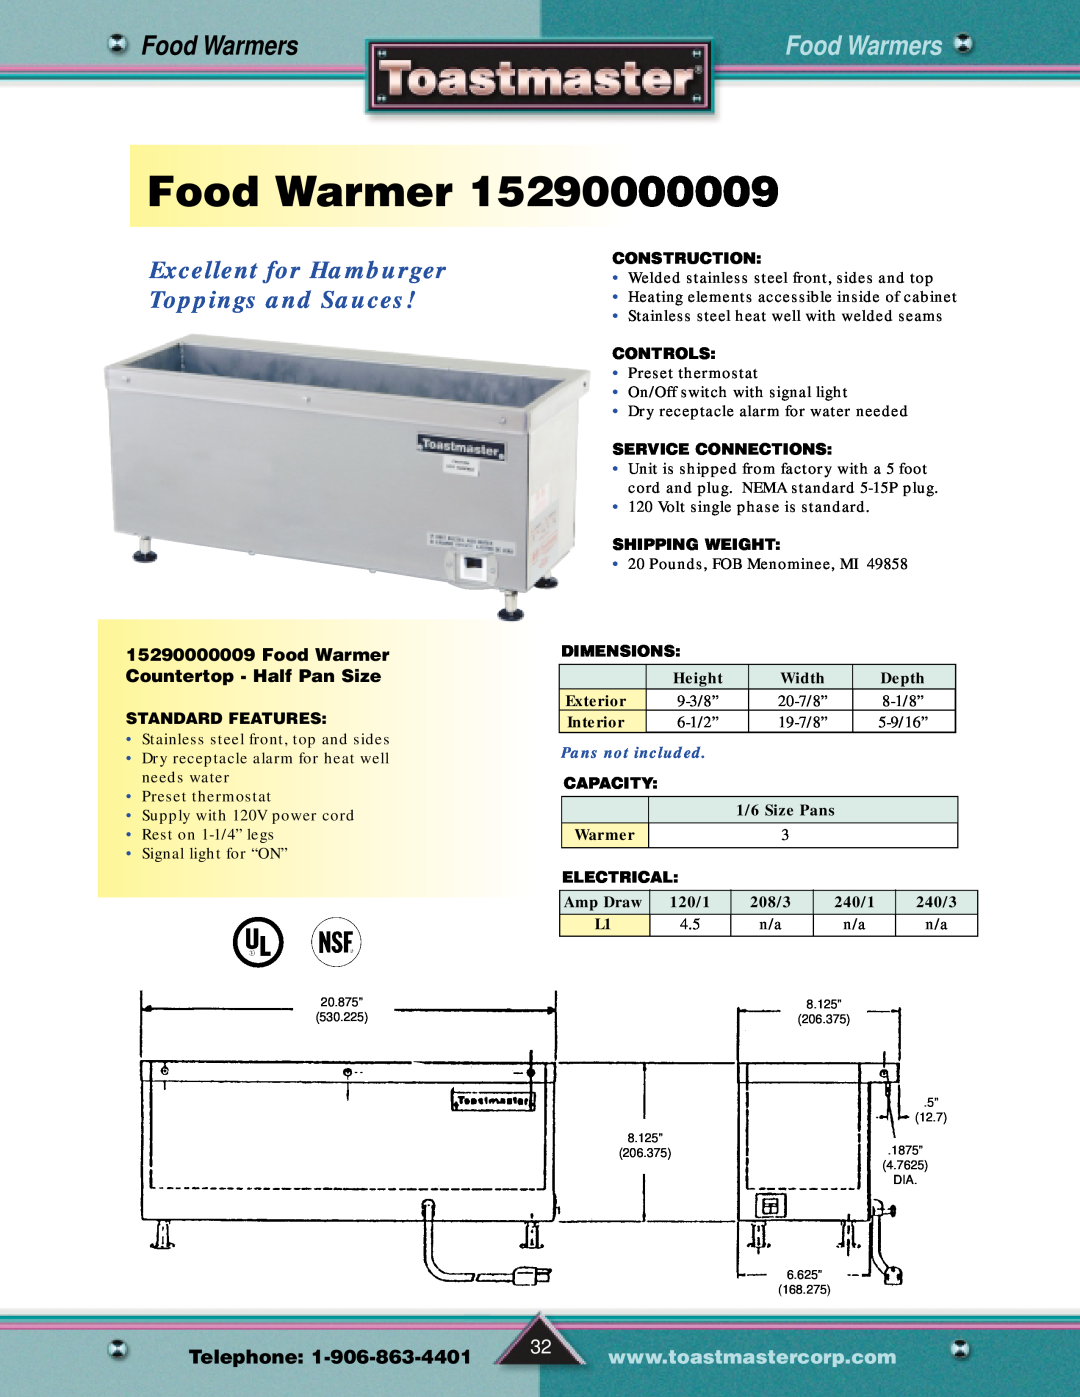 Toastmaster Gas & Electric Fryer FoodWarmer15290000009, Food Warmers, Food Warmer Countertop - Half Pan Size, Telephone 